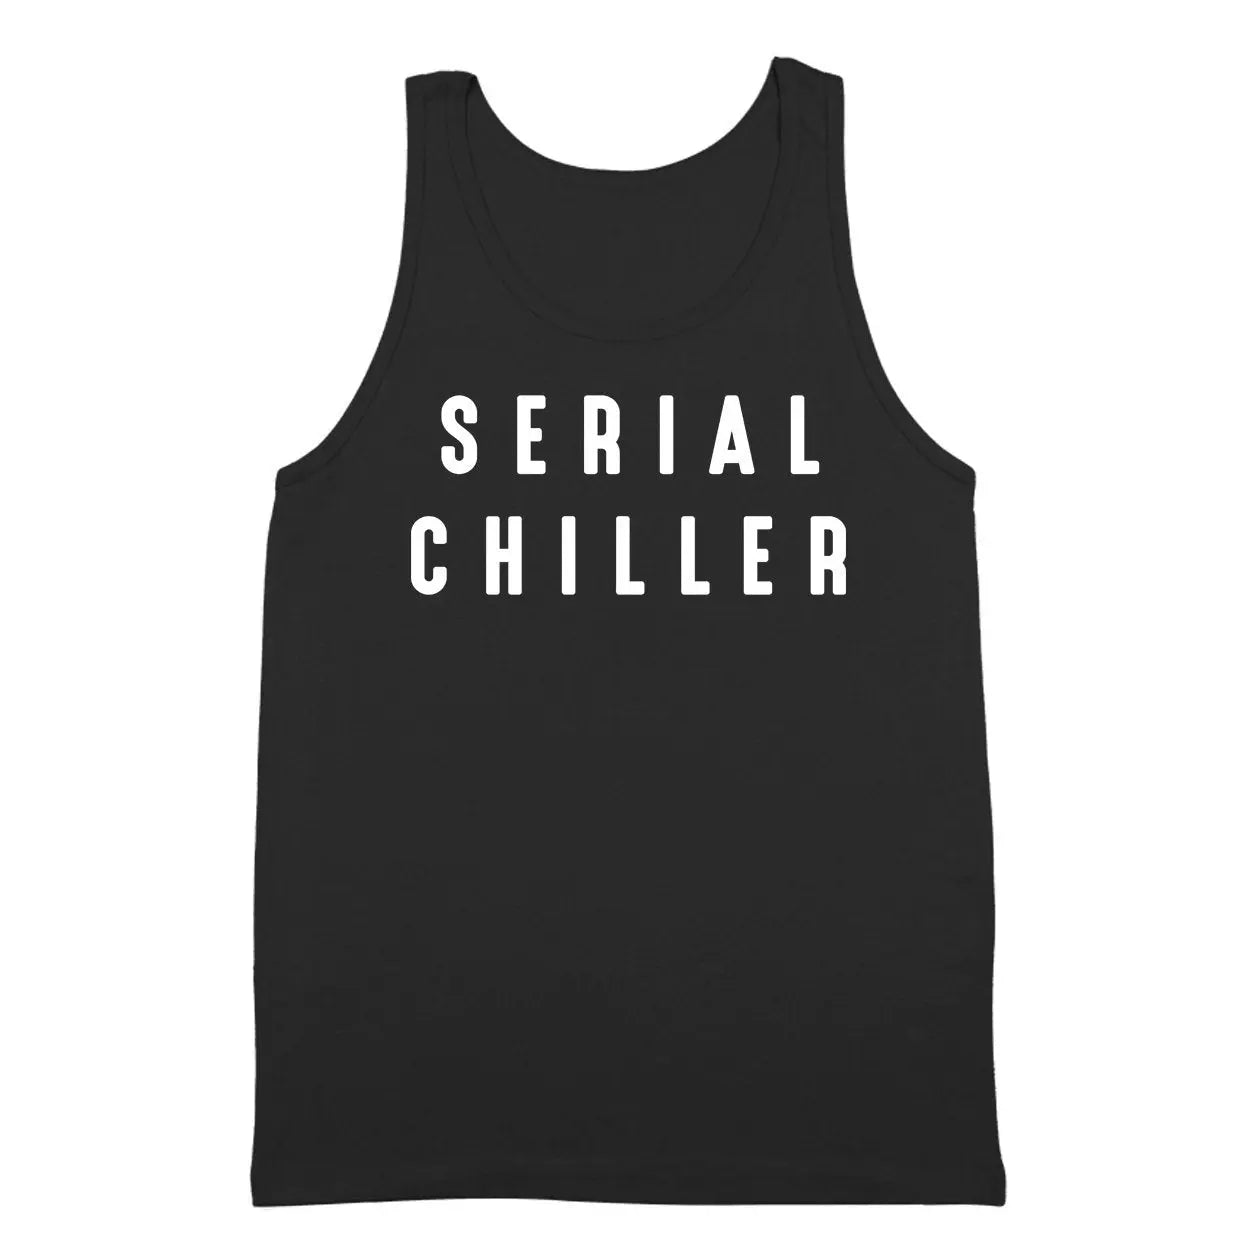 Serial Chiller Tshirt - Donkey Tees